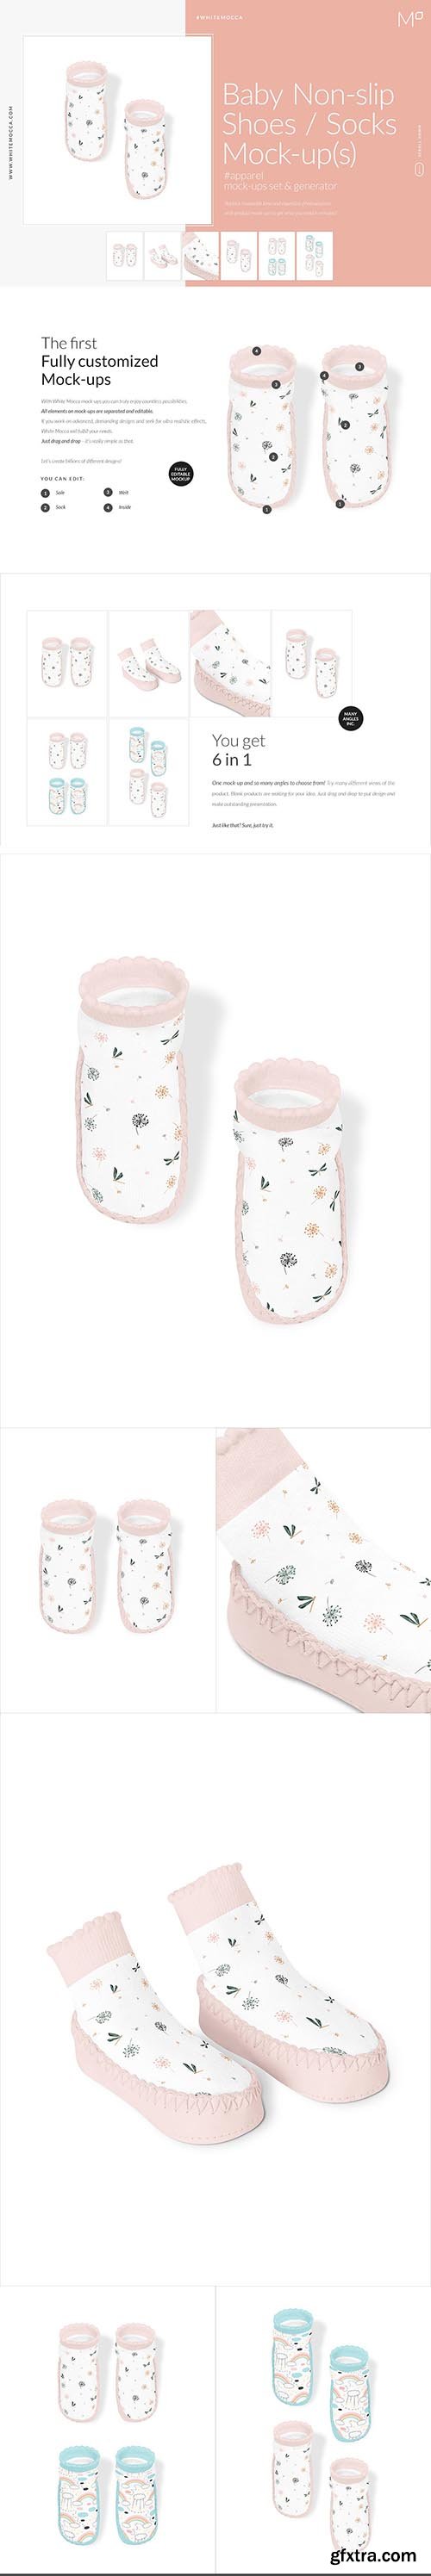 CreativeMarket - Baby Non-slip Shoes / Socks Mock-ups 4548189